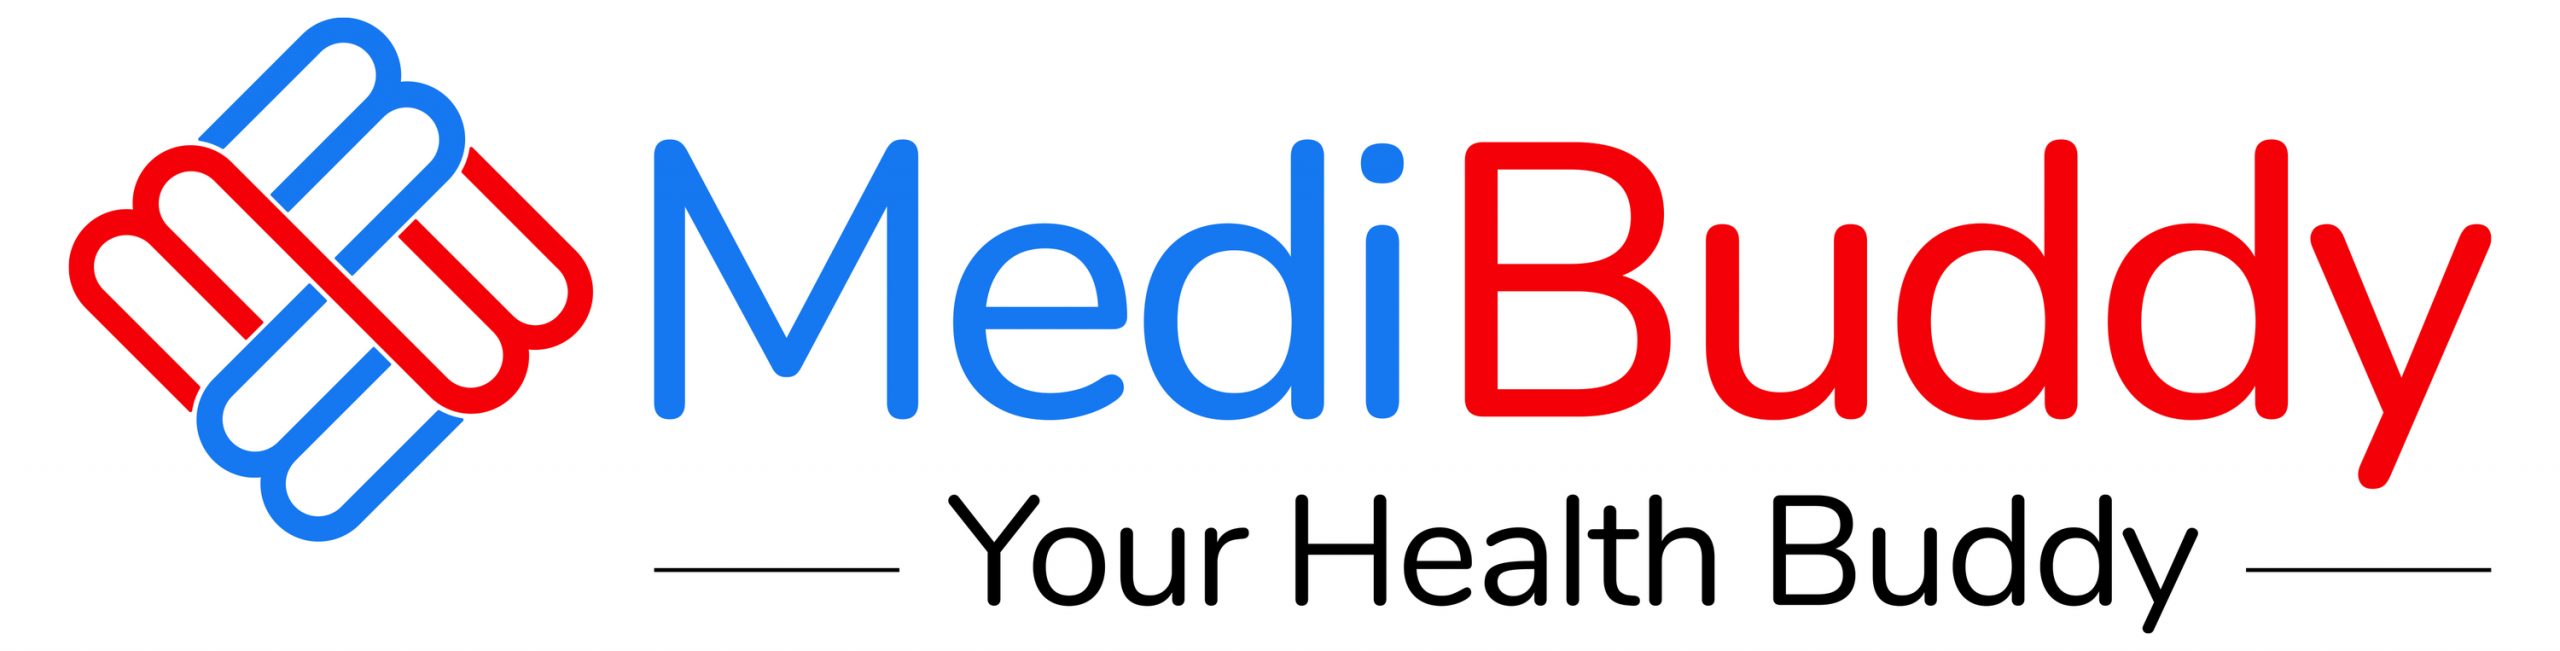 Medi Buddy Logo